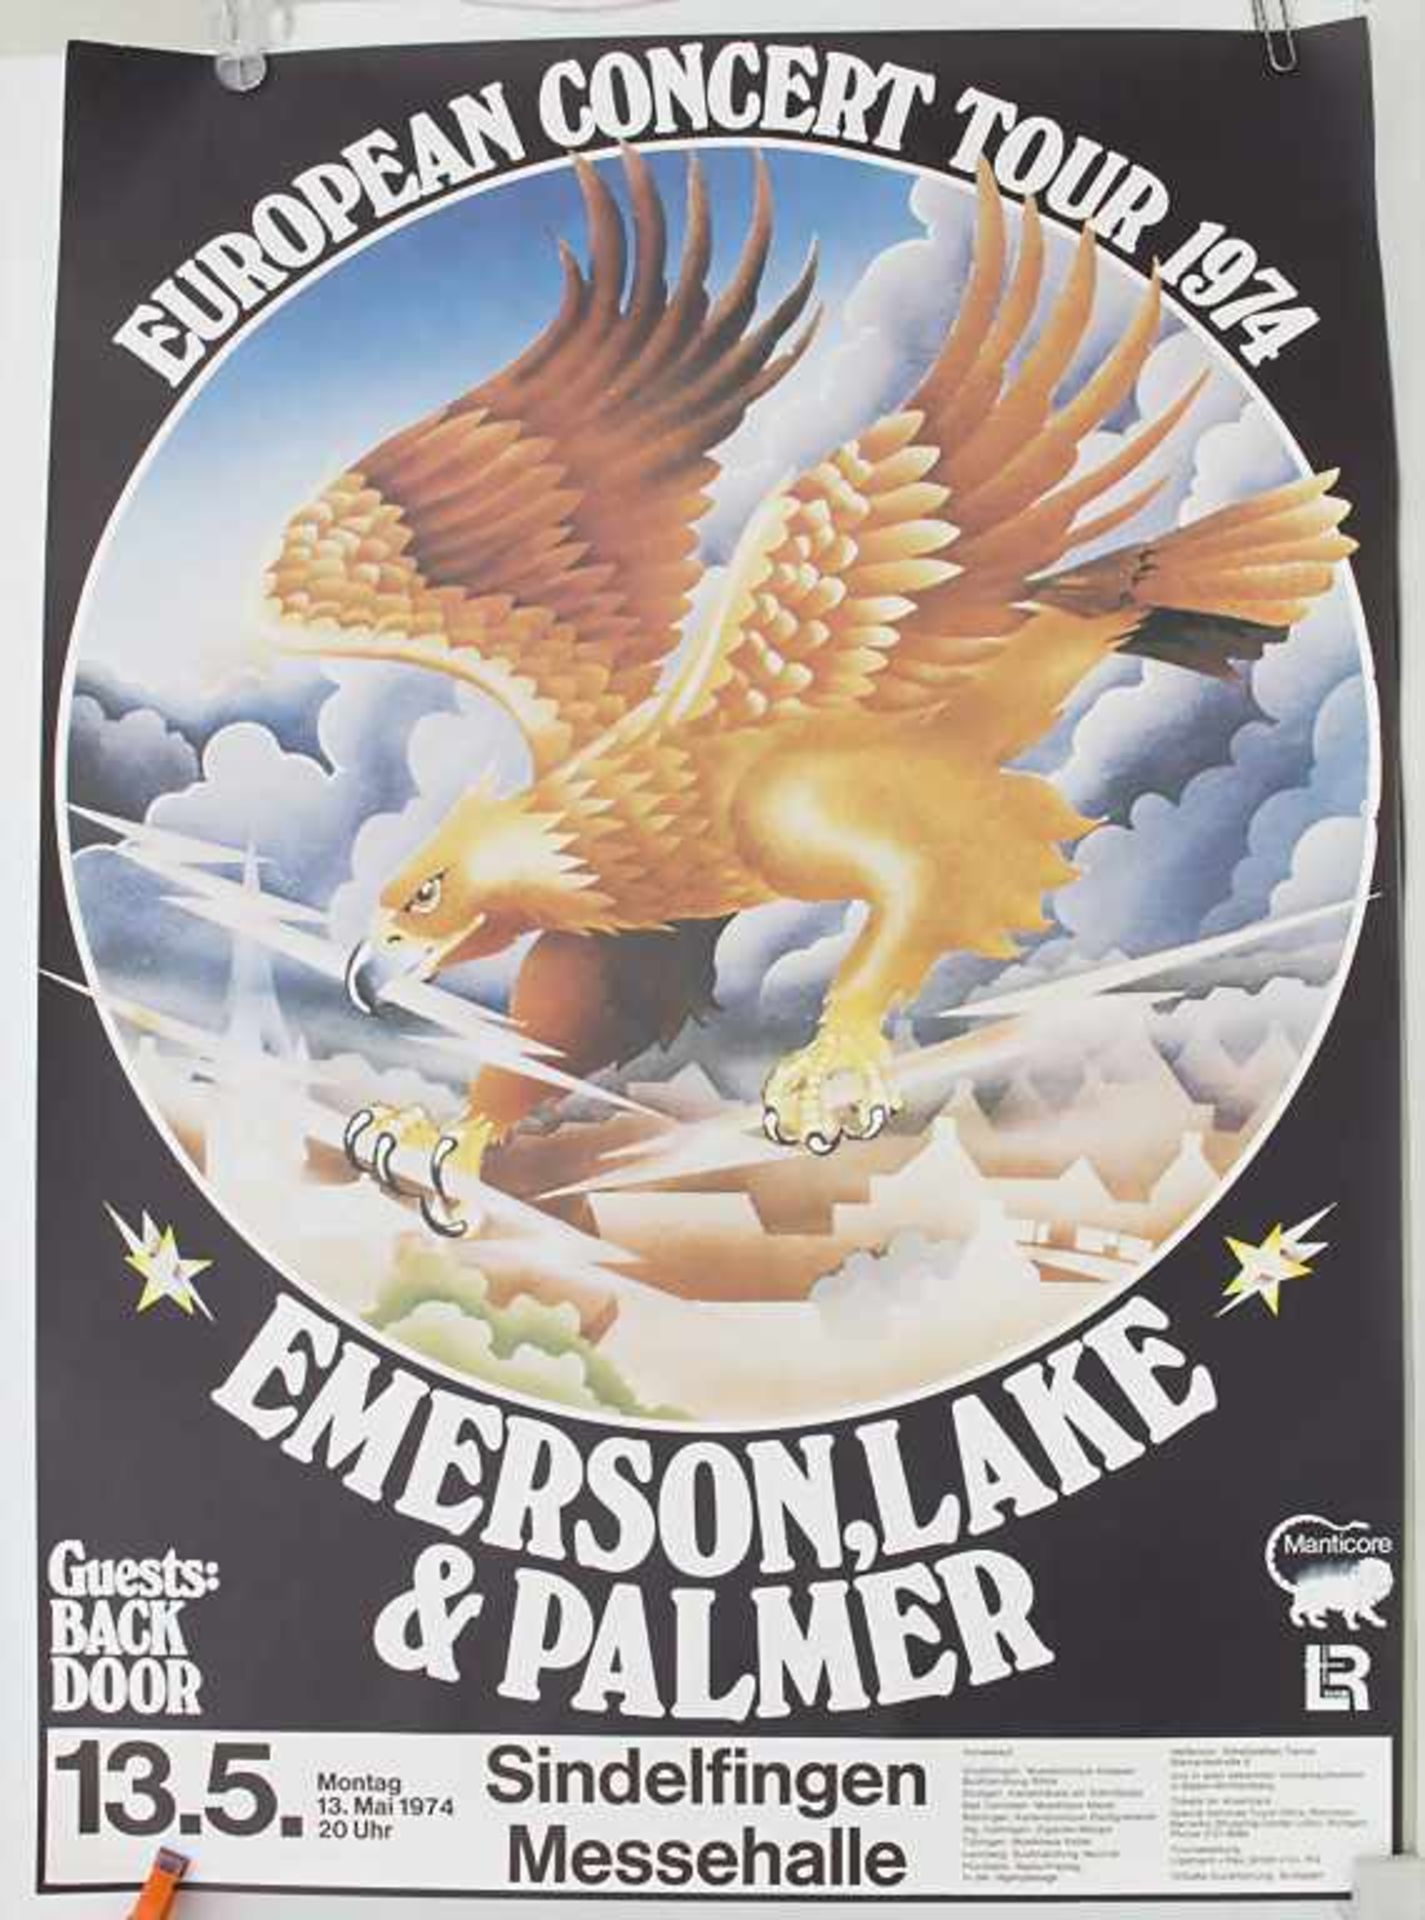 Konzertplakat 'Emerson Lake & Palmer' / A concert poster 'Emerson Lake & Palmer', Sindelfingen, - Image 2 of 3